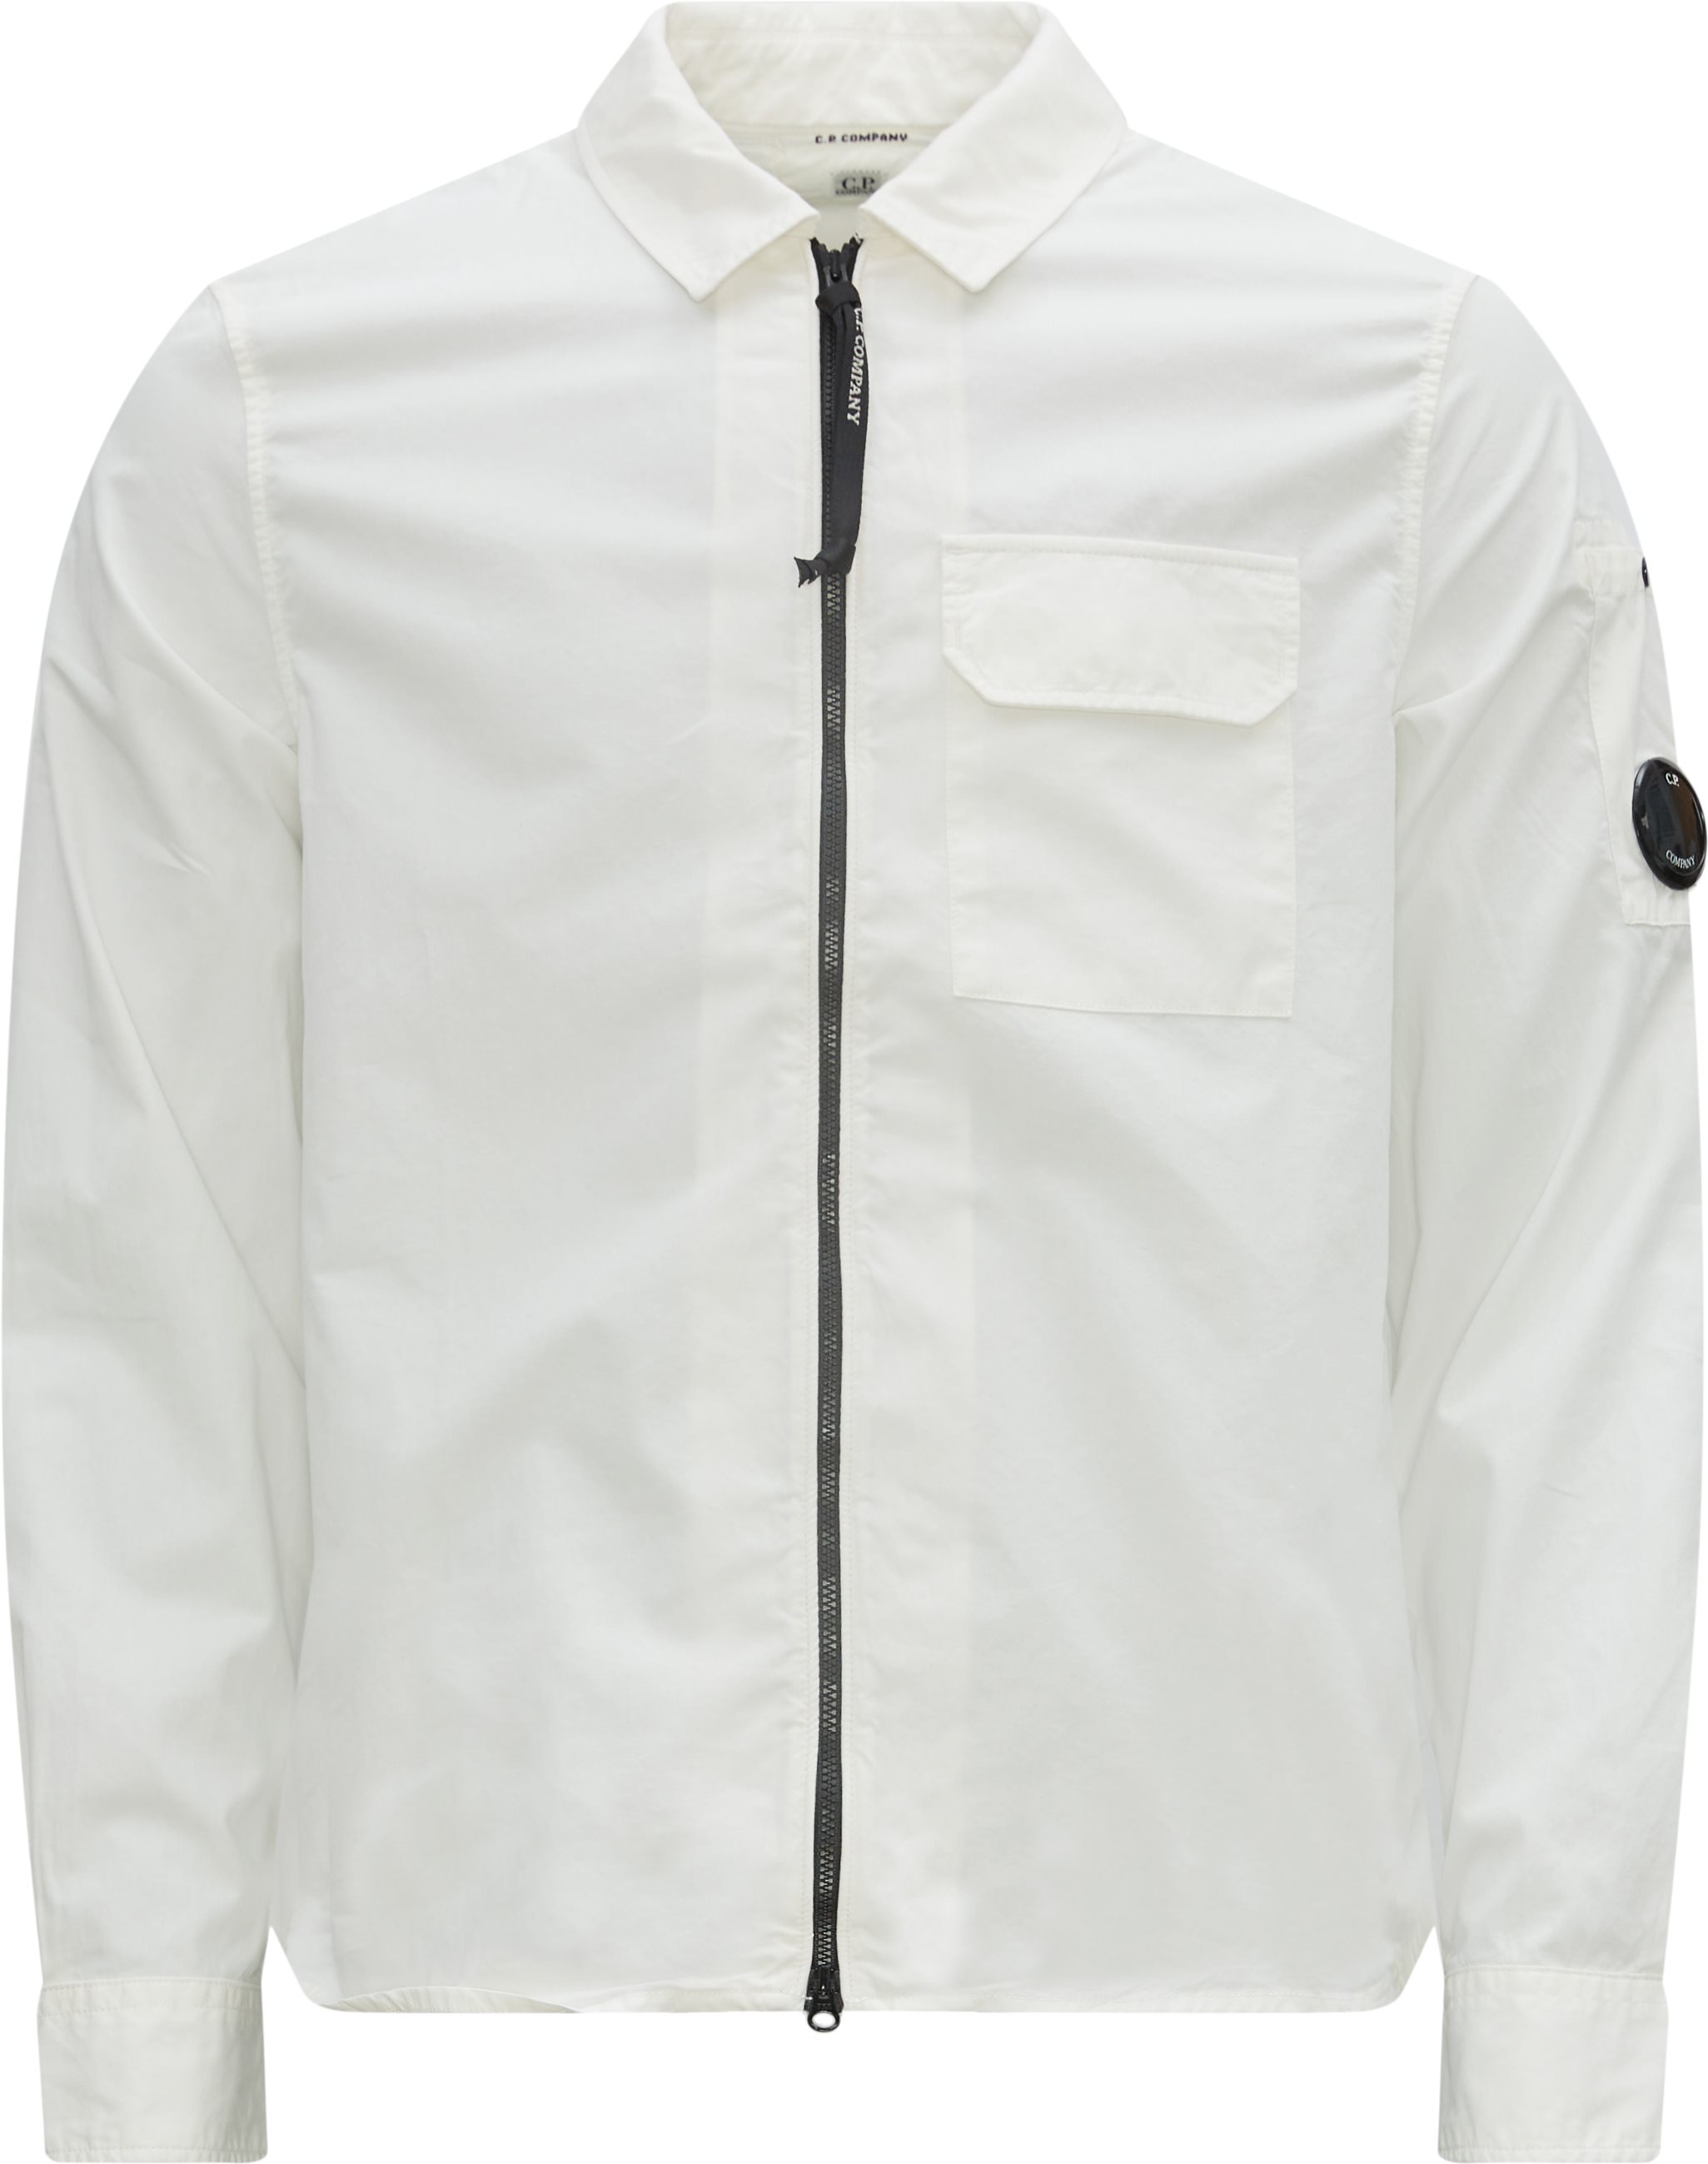 C.P. Company Shirts SH158A 2824G White